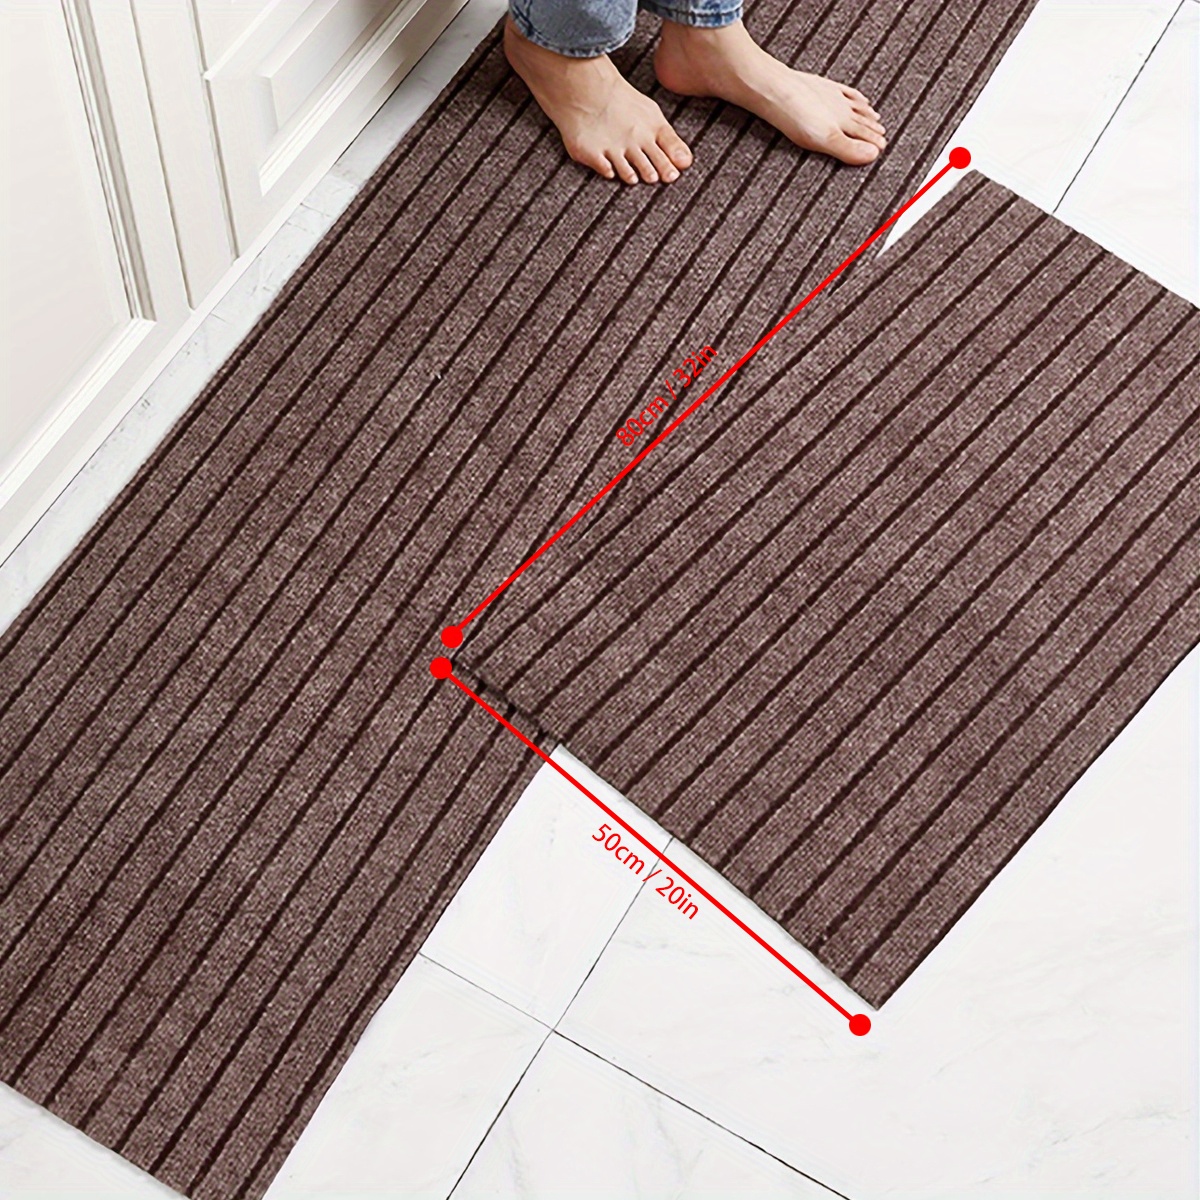 Rubber Kitchen Floor Mat Bedroom Living Room Long Strip Carpet